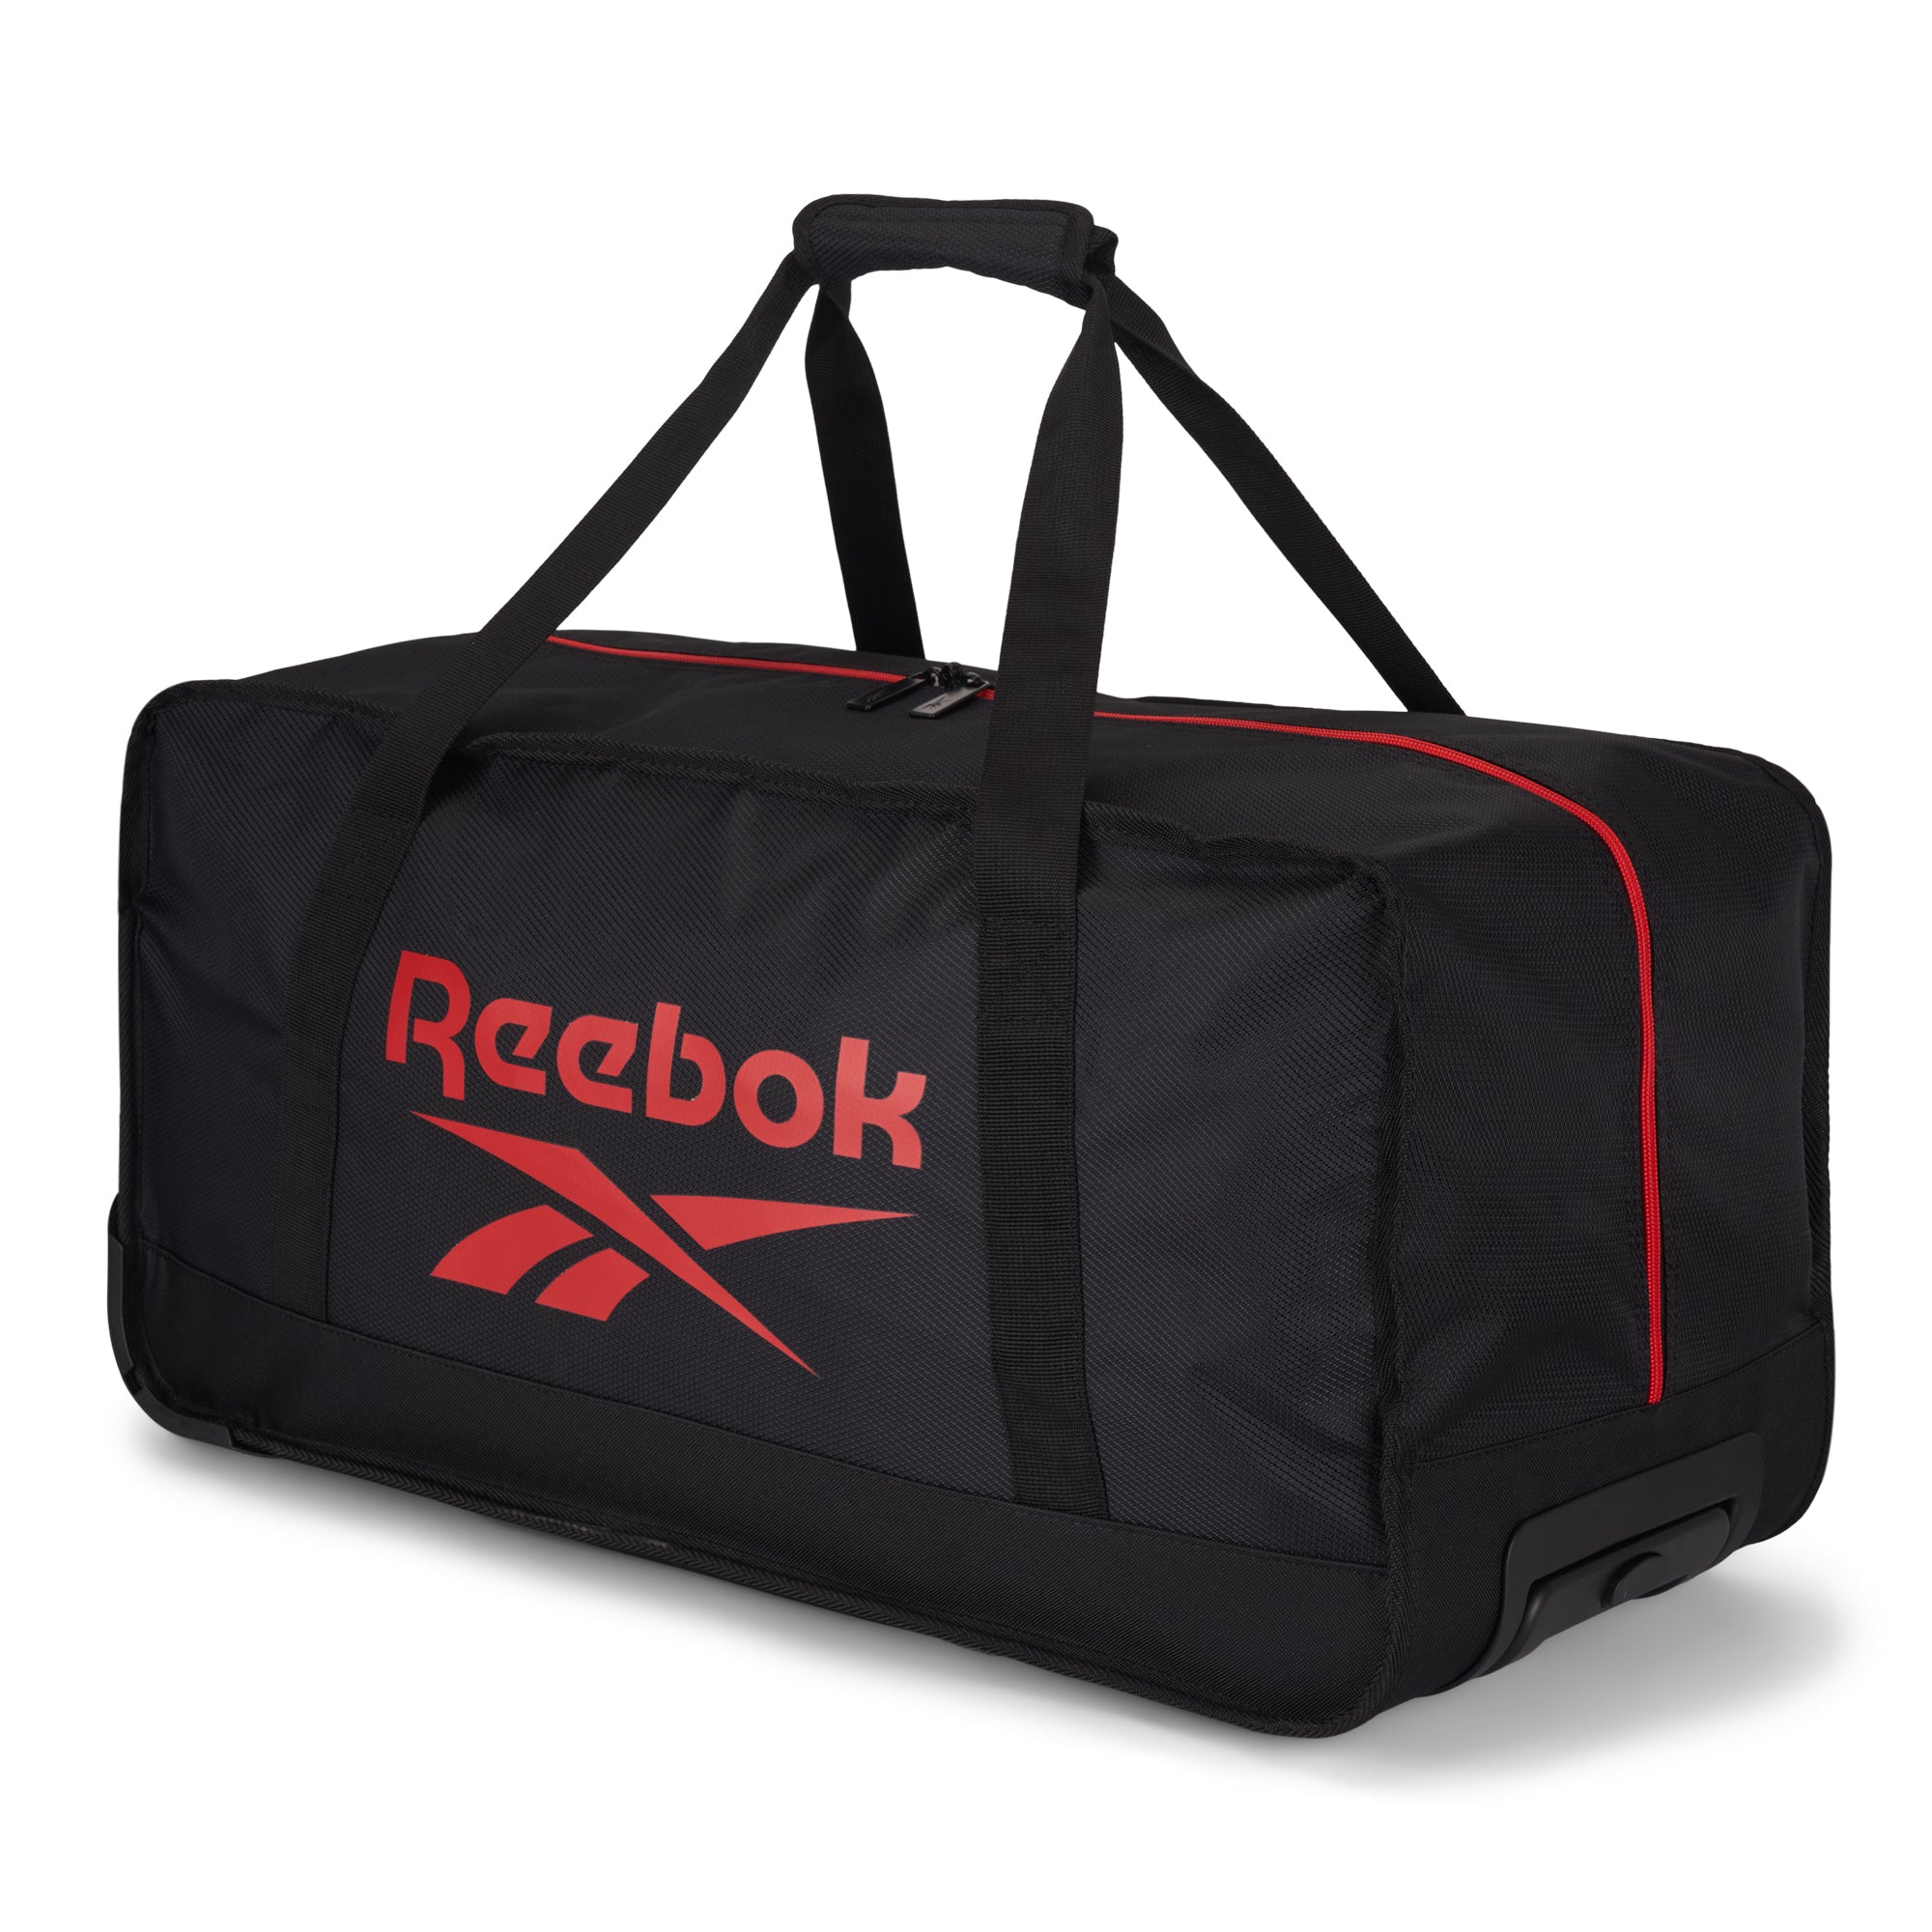 Reebok Blue Travel Bags | Mercari